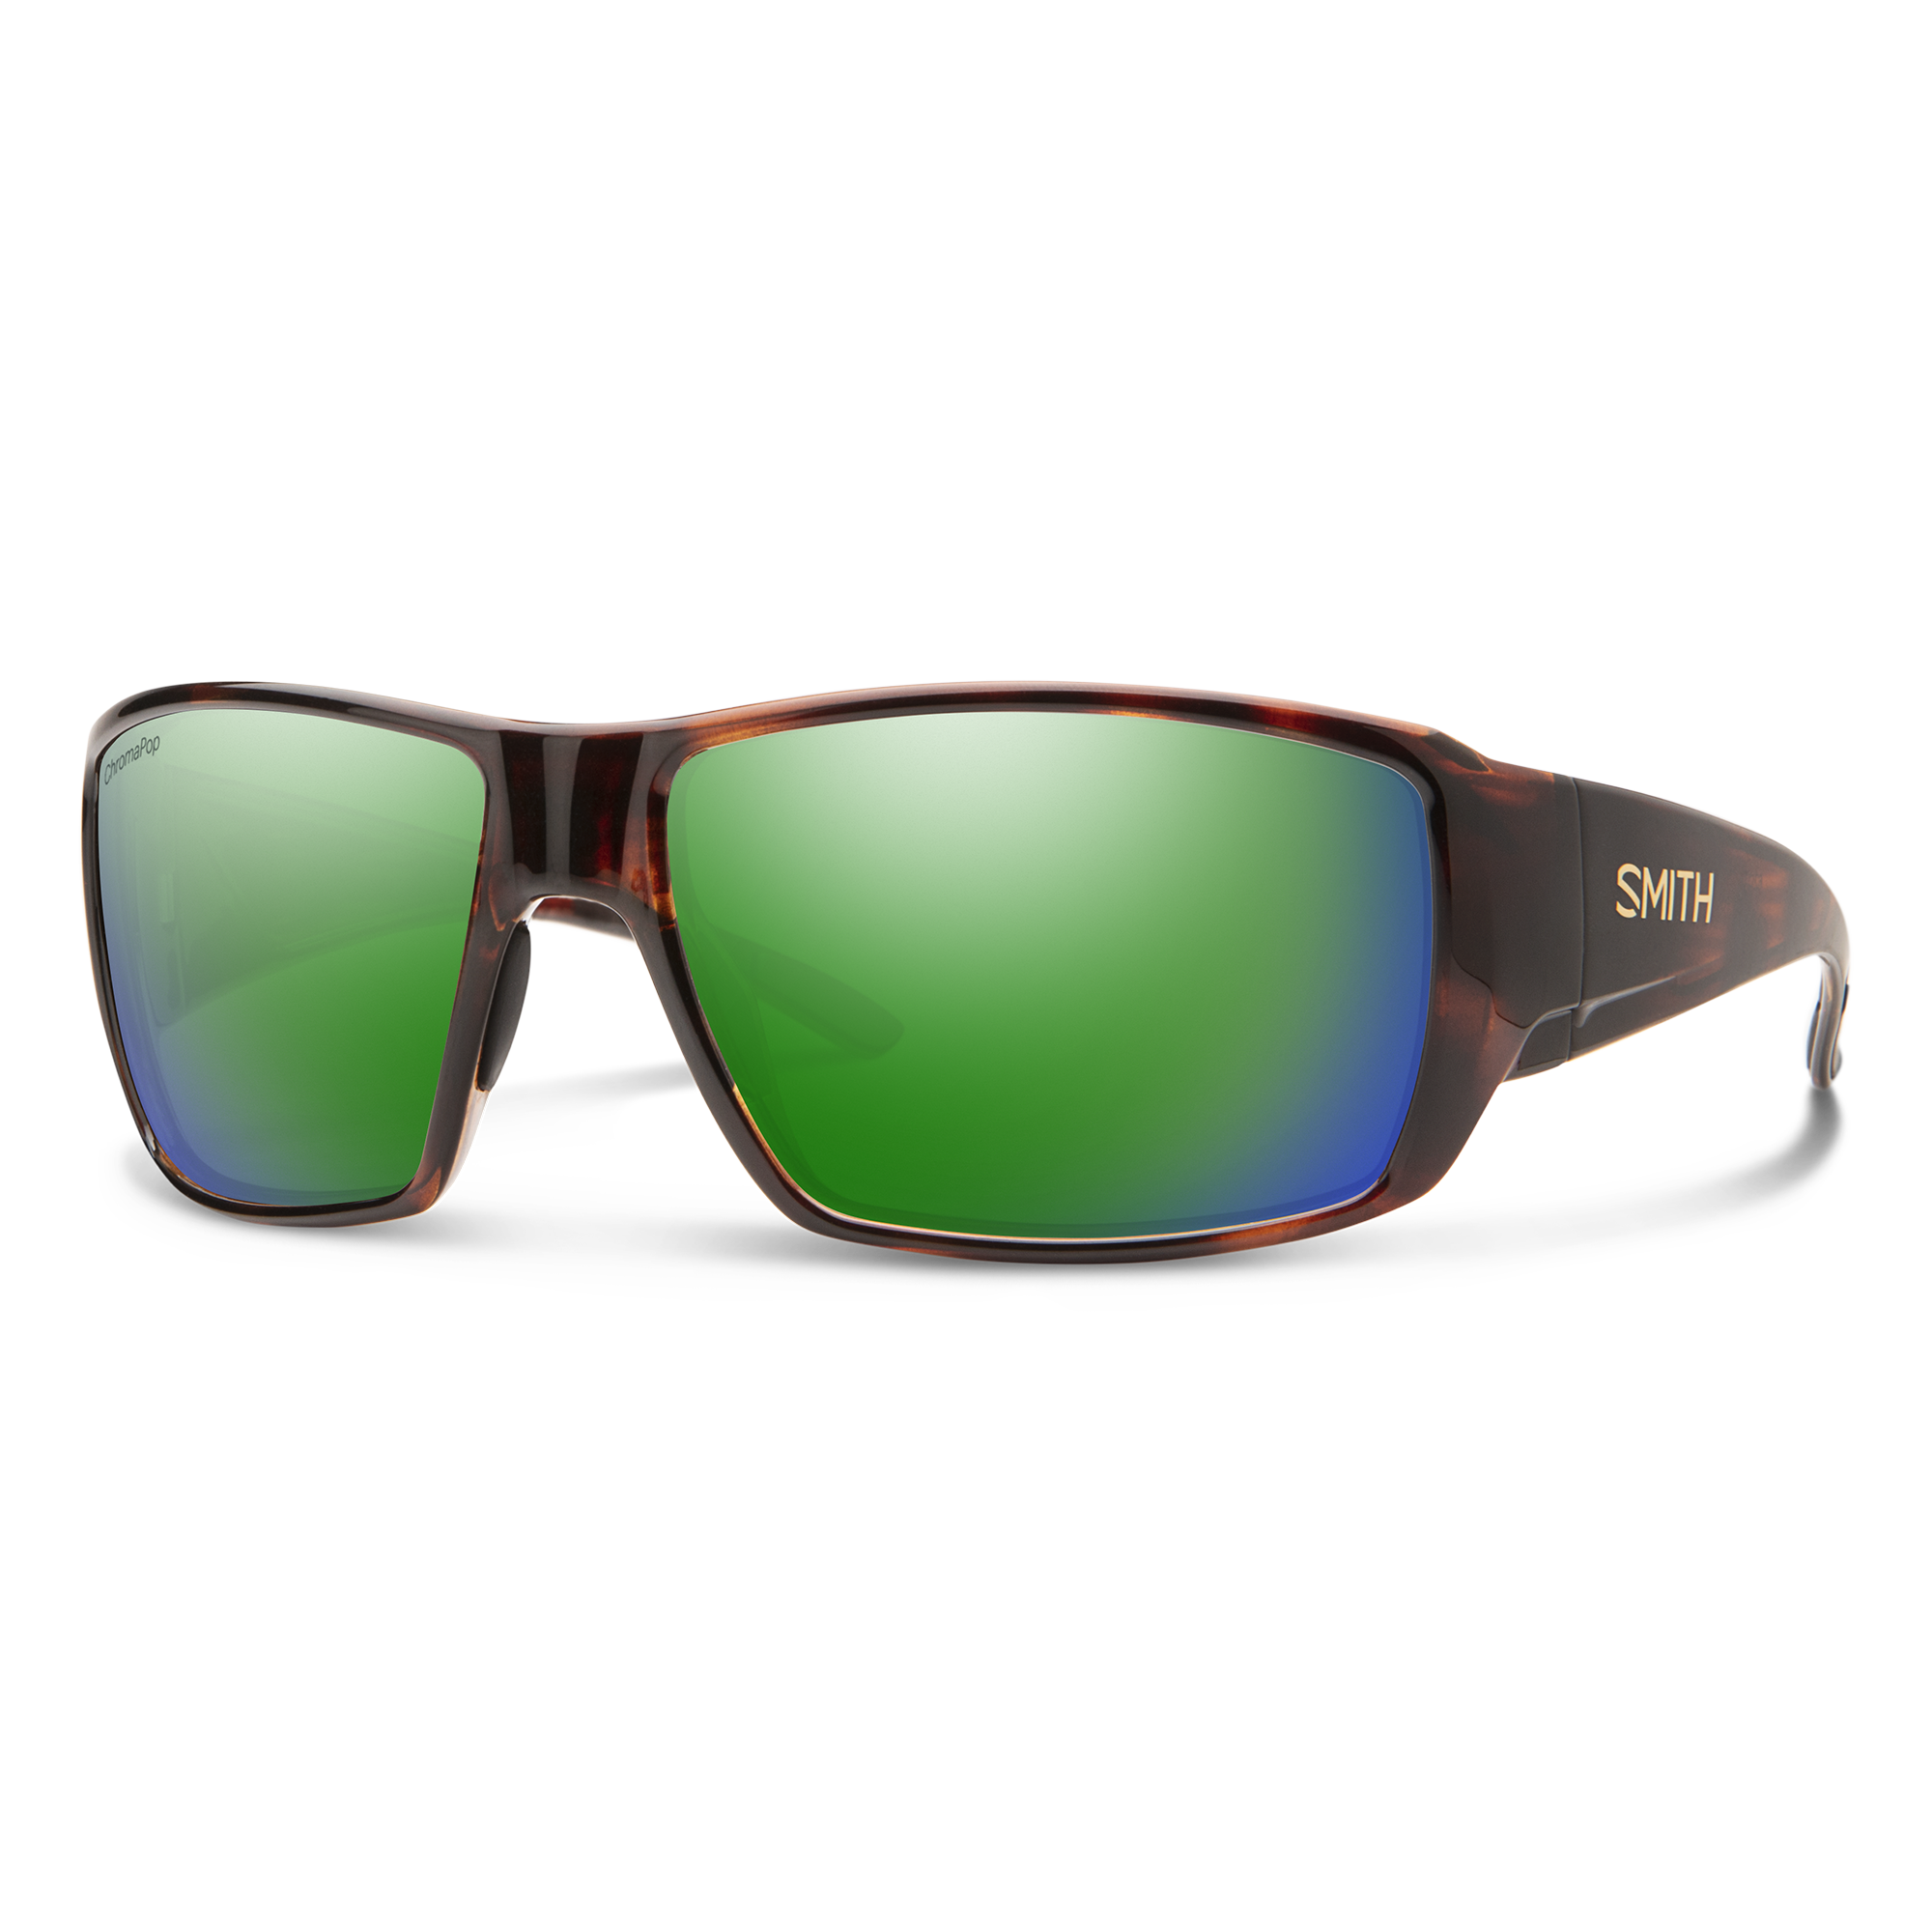 Green/Yellow Single WOMEN FASHION Accessories Sunglasses discount 63% Blackguard'64 Sunglasses frame green mirror glass yellow 